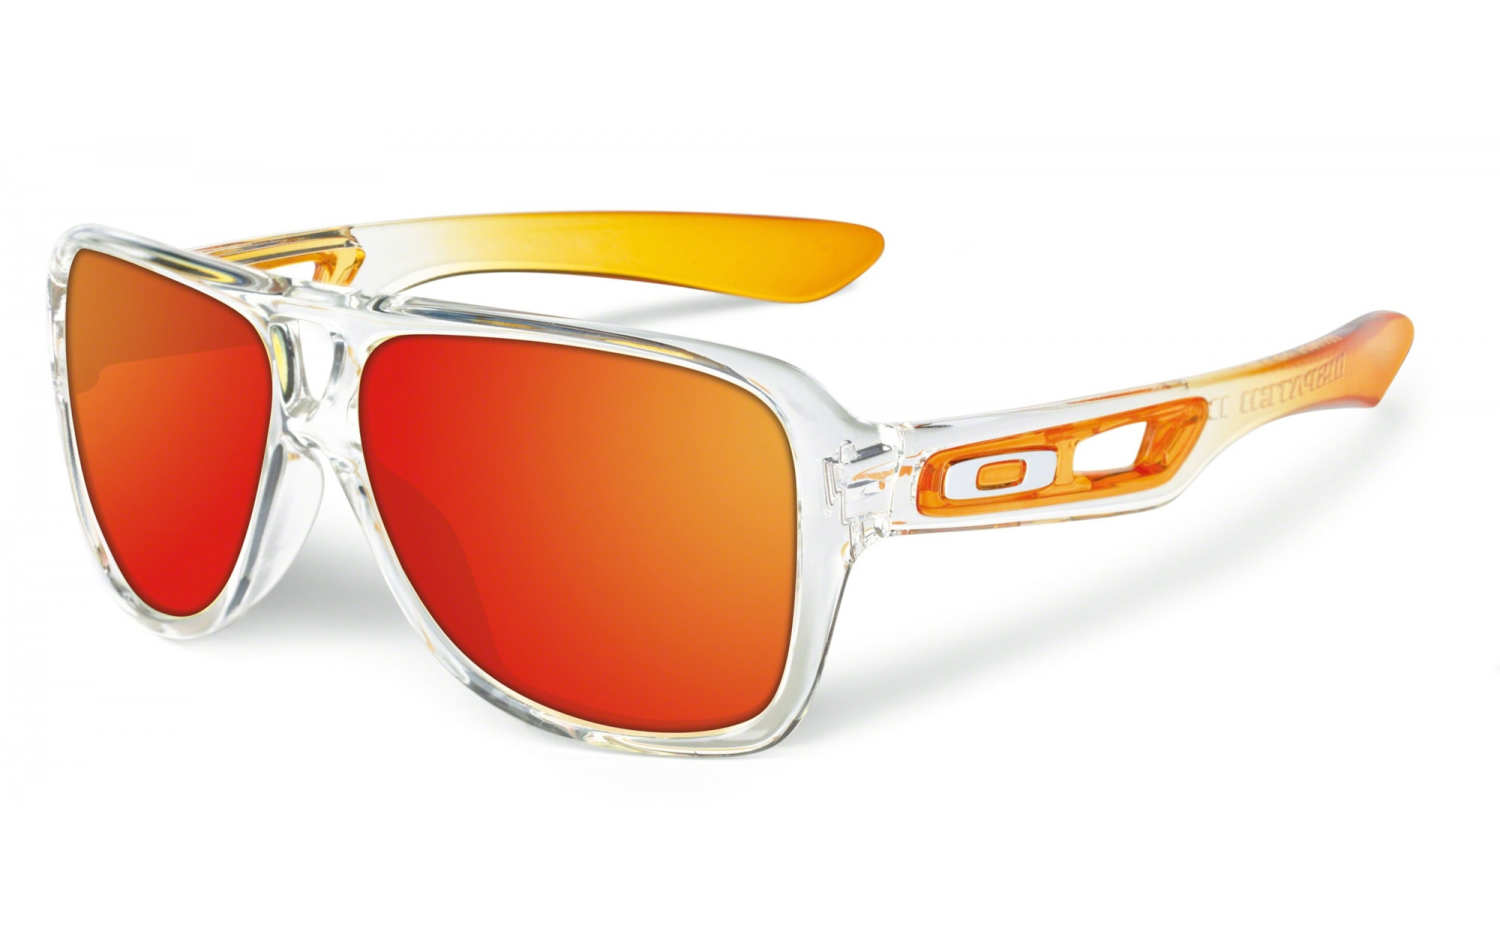 Купить очки 10. Очки oakley Dispatch. Oakley Dispatch очки Dispatch 2. Oakley очки oakley очки. Очки для солнца oakley Dispatch oo9090-08.